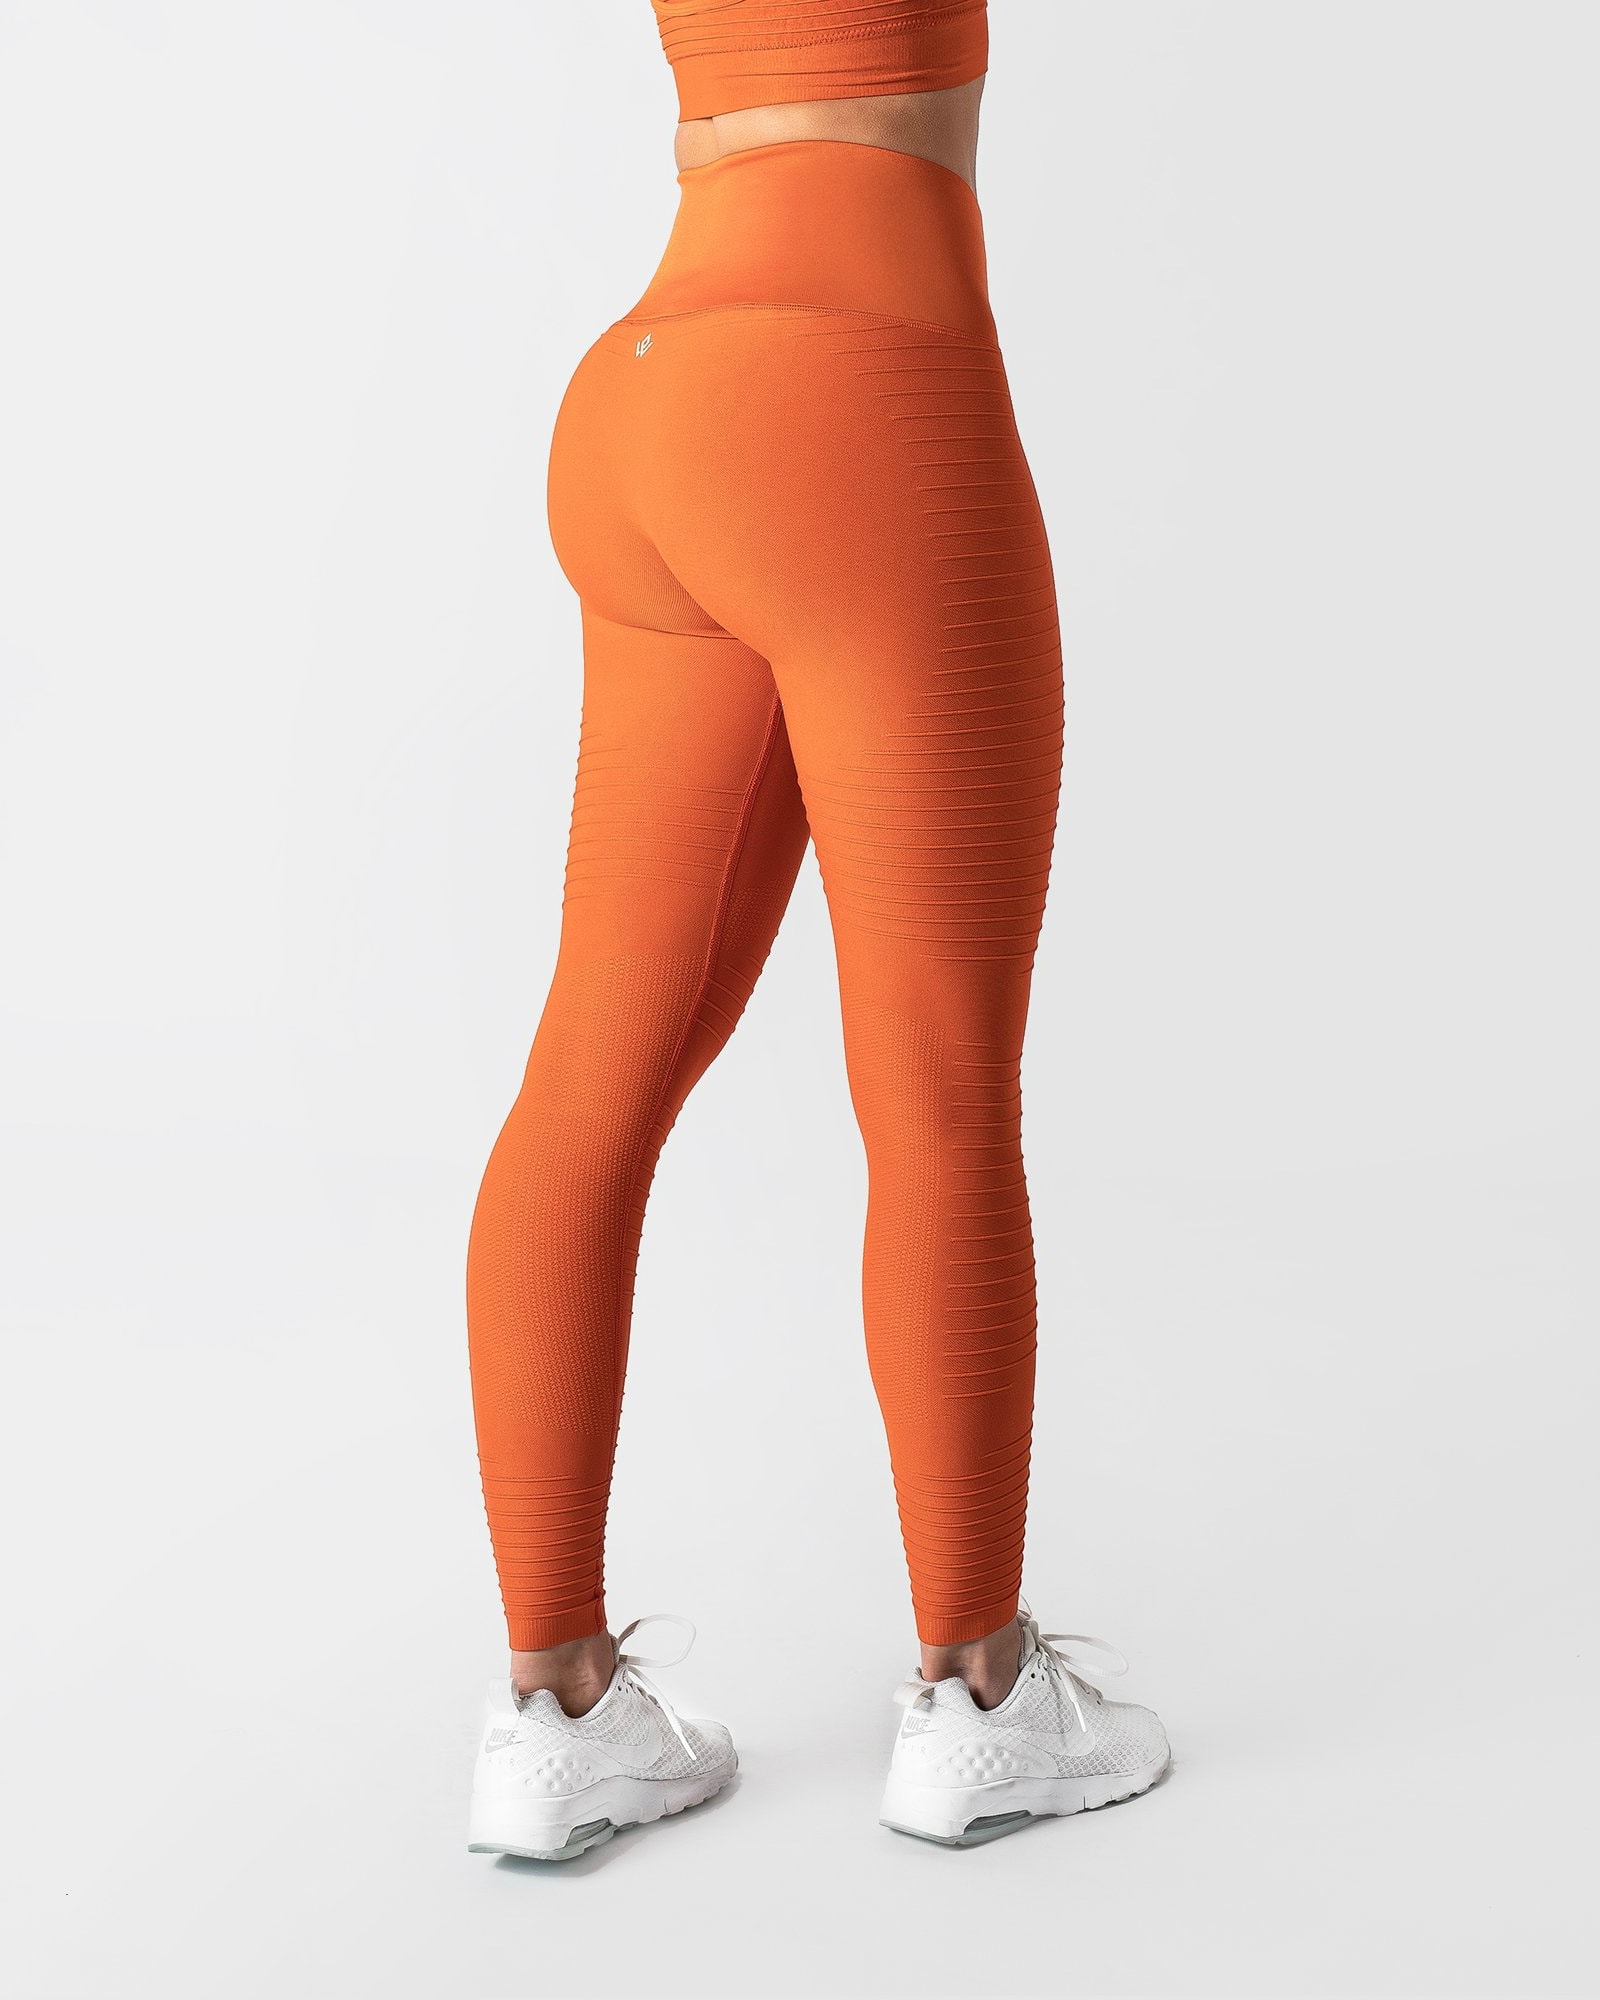 10 Minute Orange workout leggings for Burn Fat fast